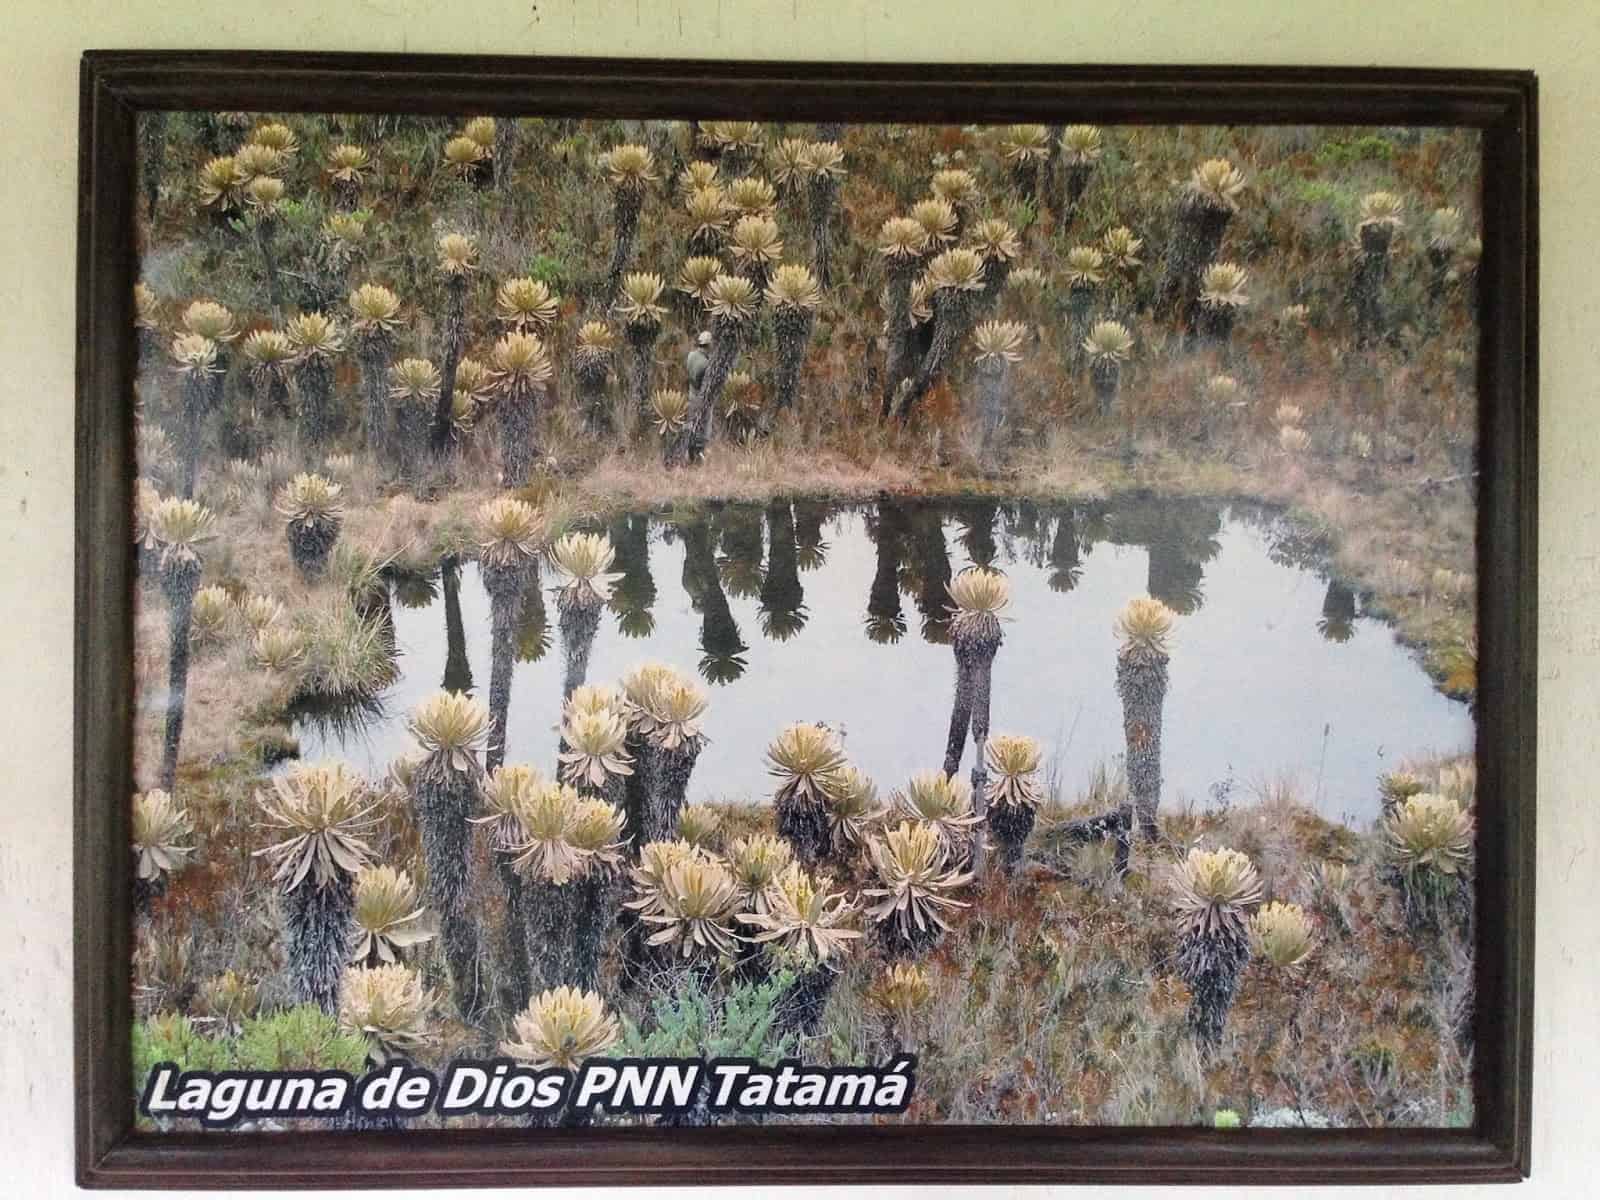 Picture of Laguna de Díos in Parque Nacional Natural Tatamá in Colombia